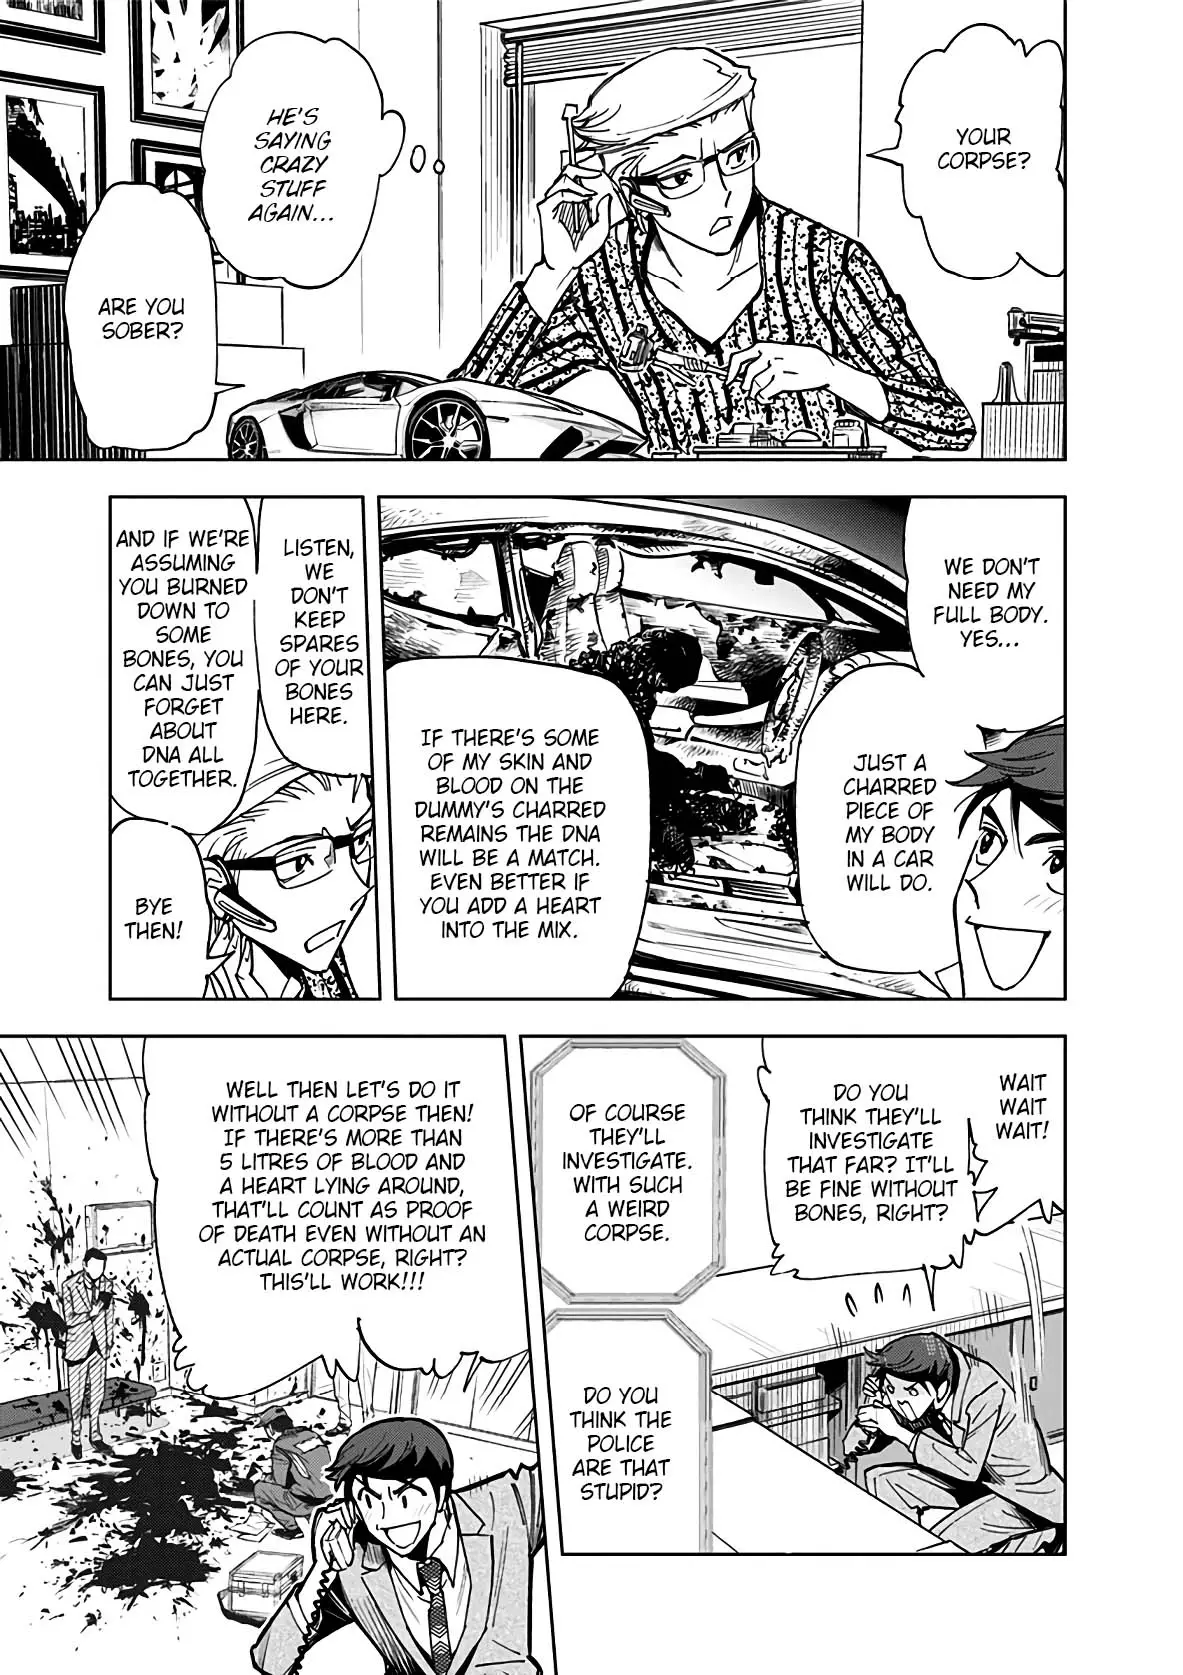 Kiruru Kill Me - 20 page 5